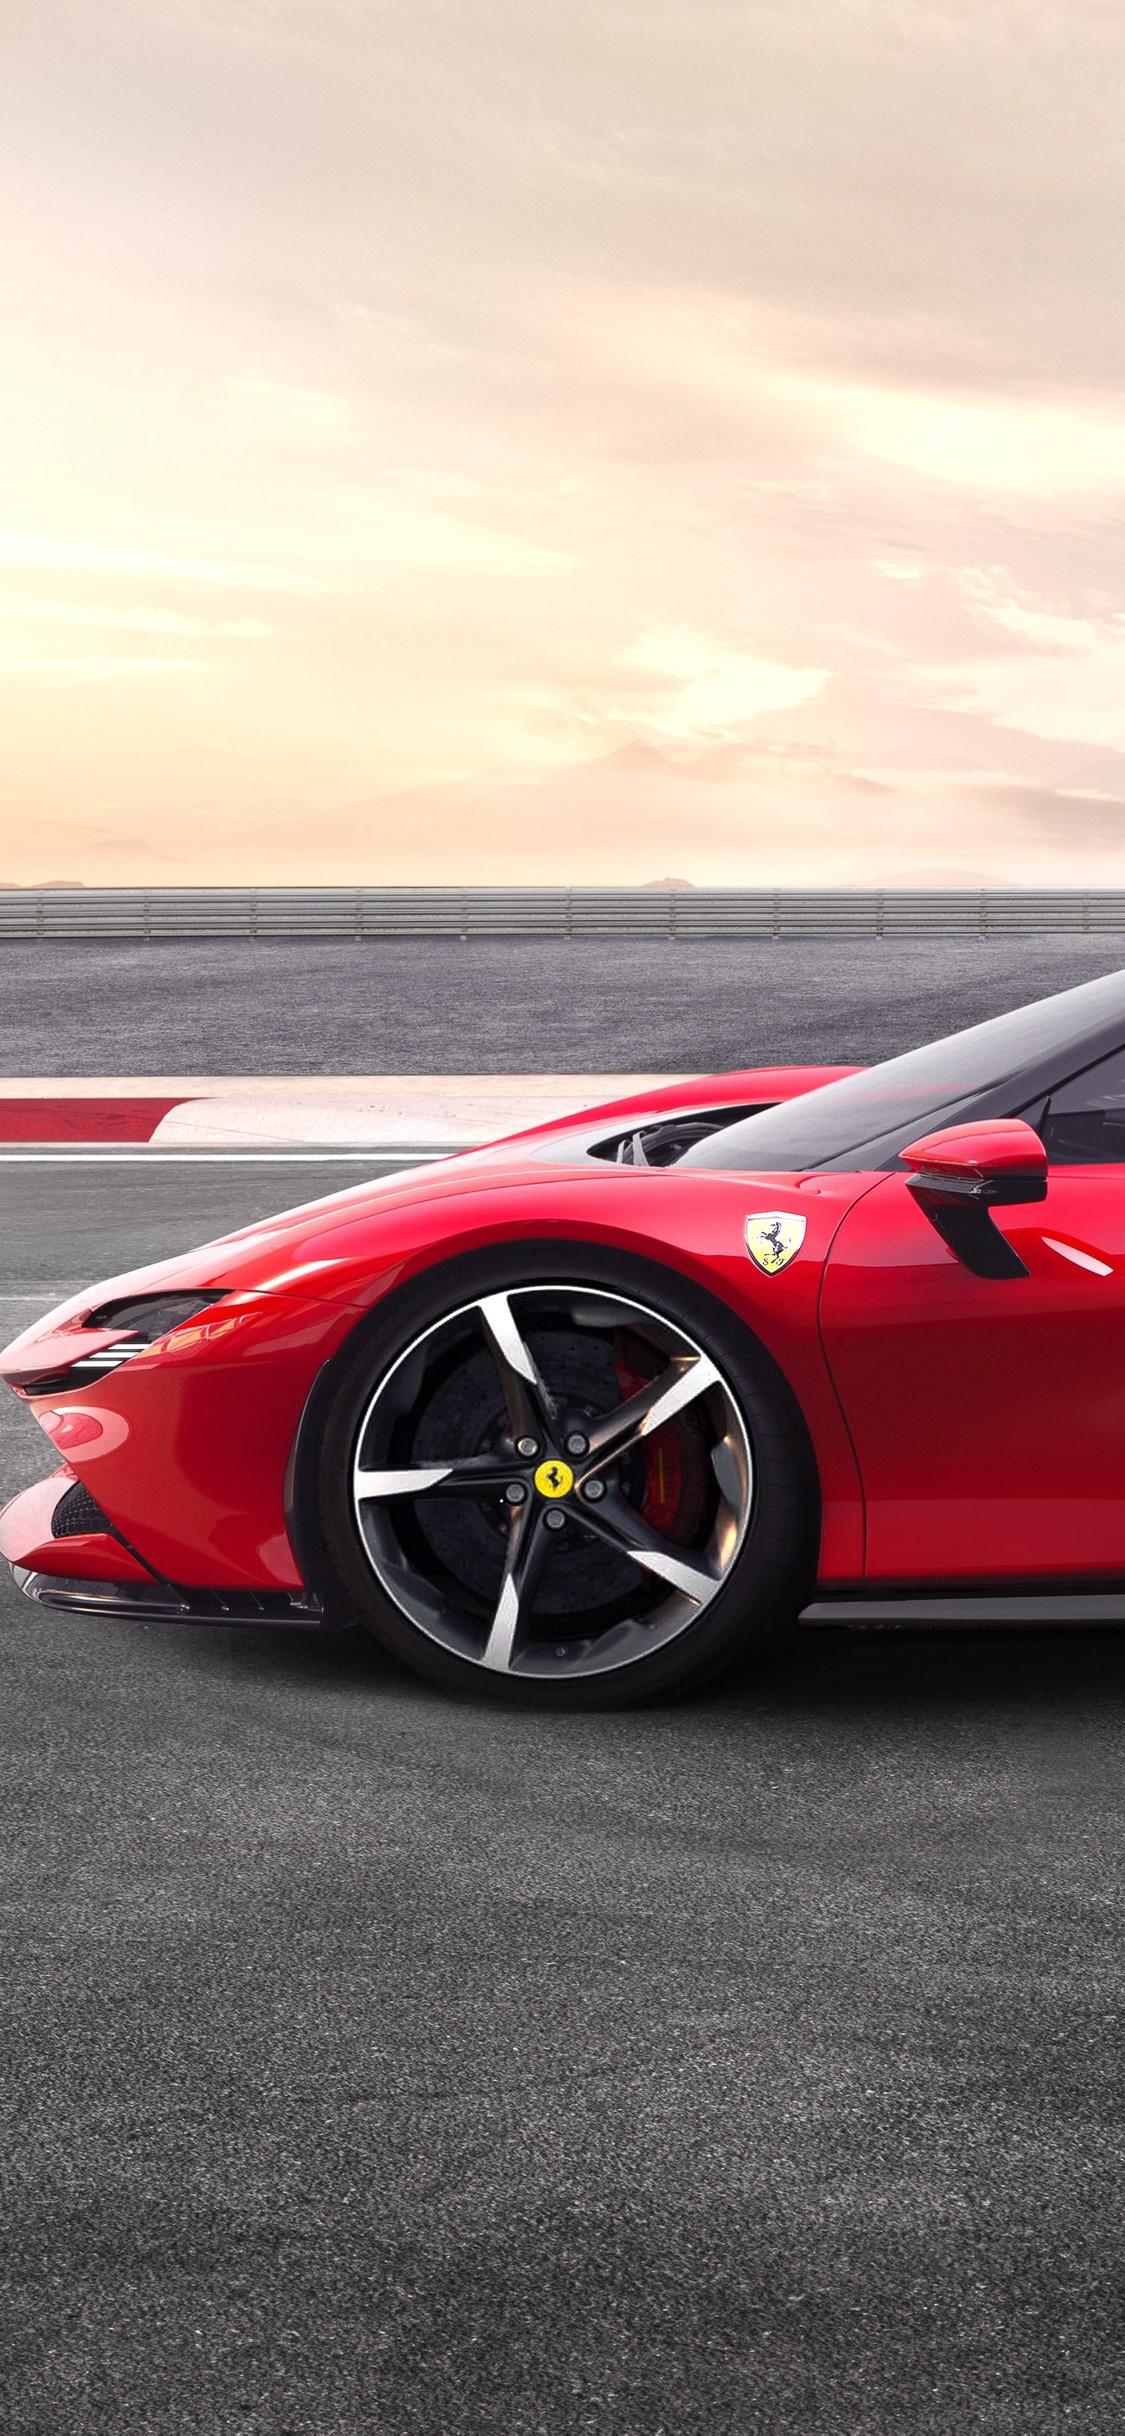 Ferrari SF90 Stradale Assetto Fiorano 2019 5k iPhone XS